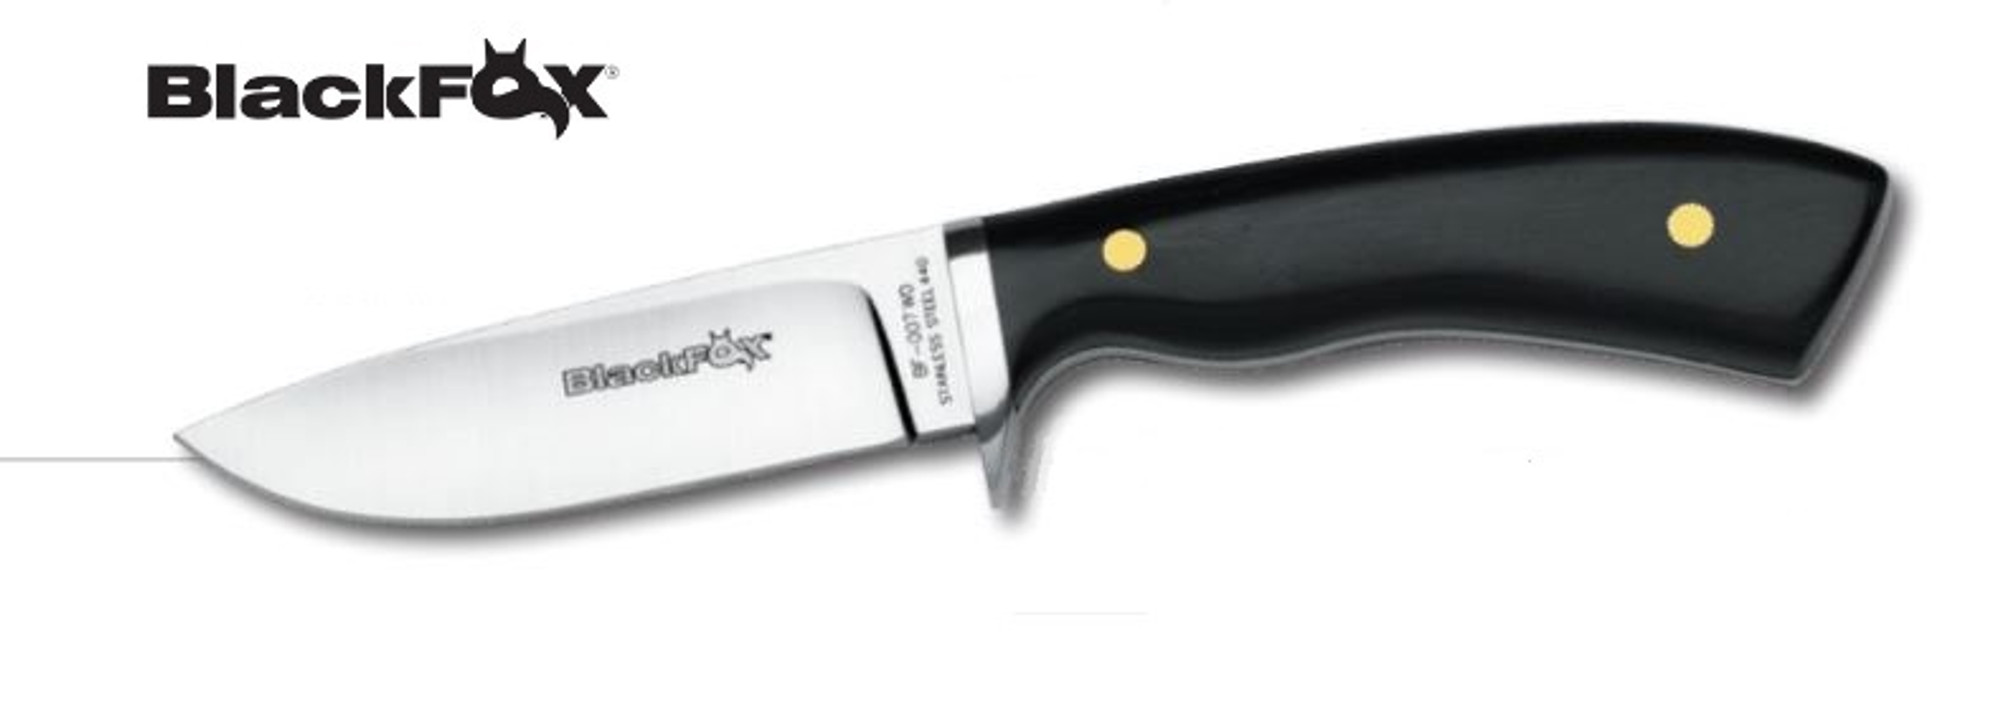 BlackFox BF009 Outdoor Knife w/Leather Sheath, 02FX114